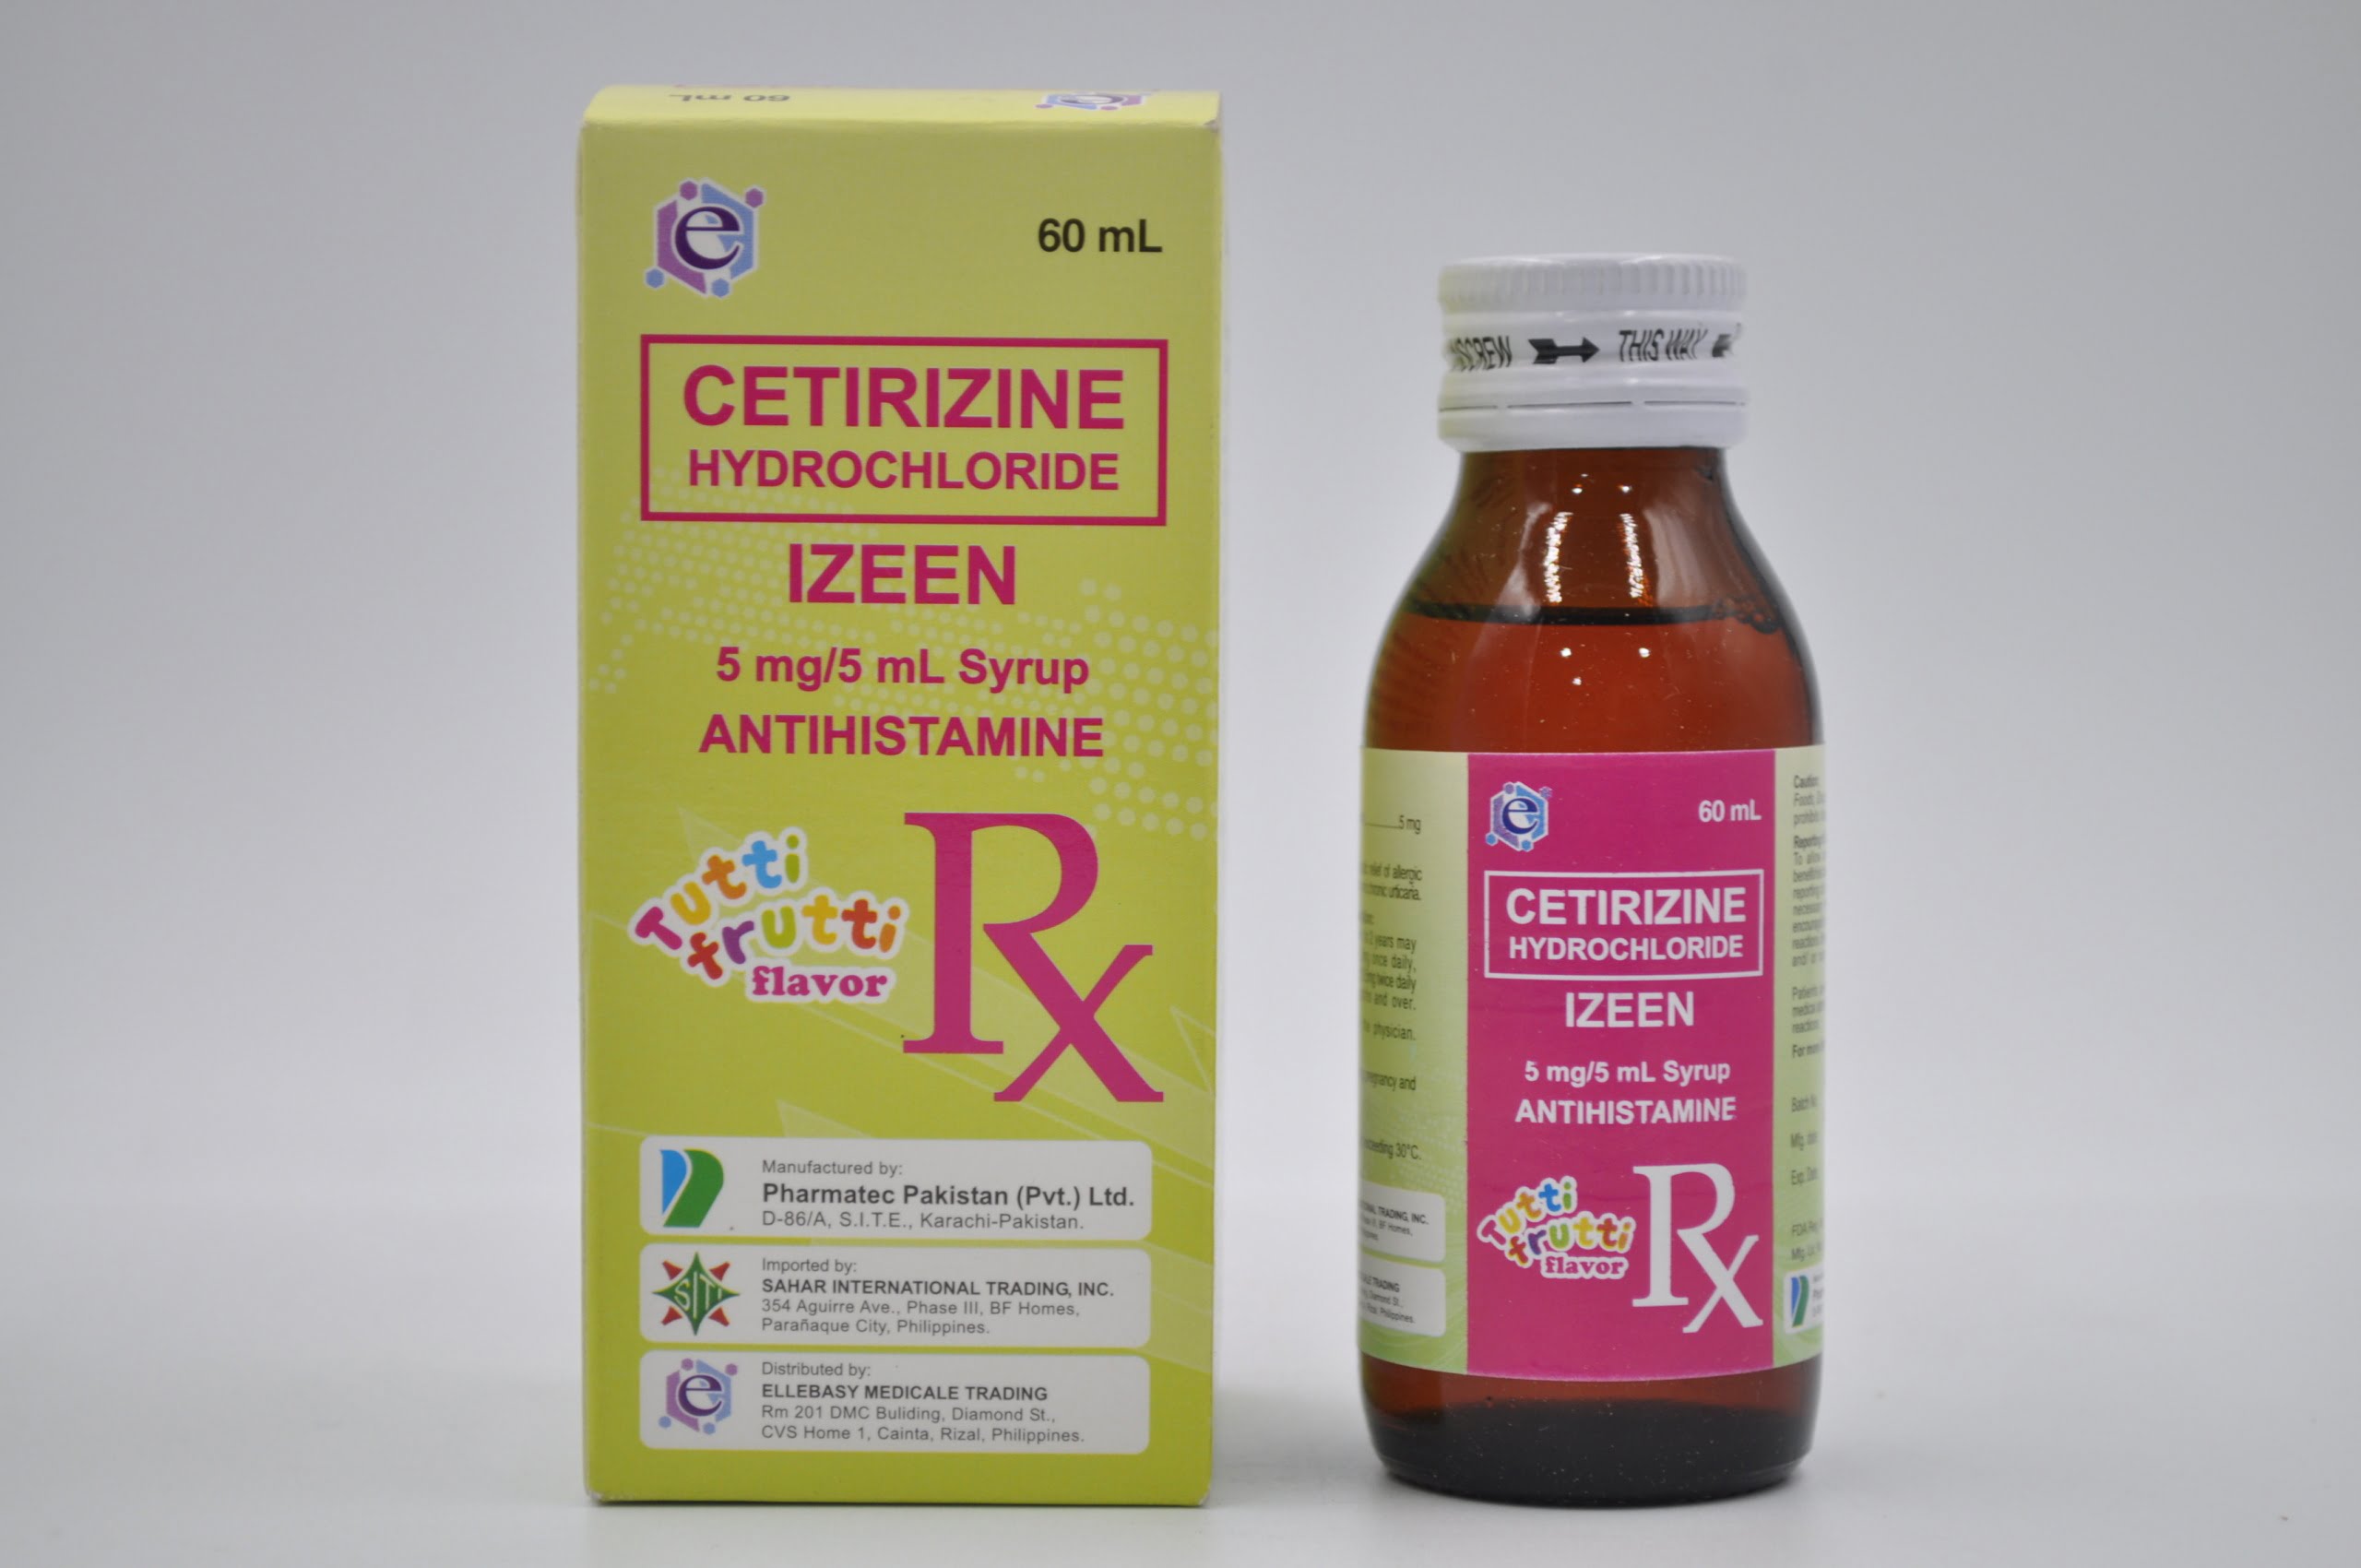 Cetirizine (as Hydrochloride) Izeen